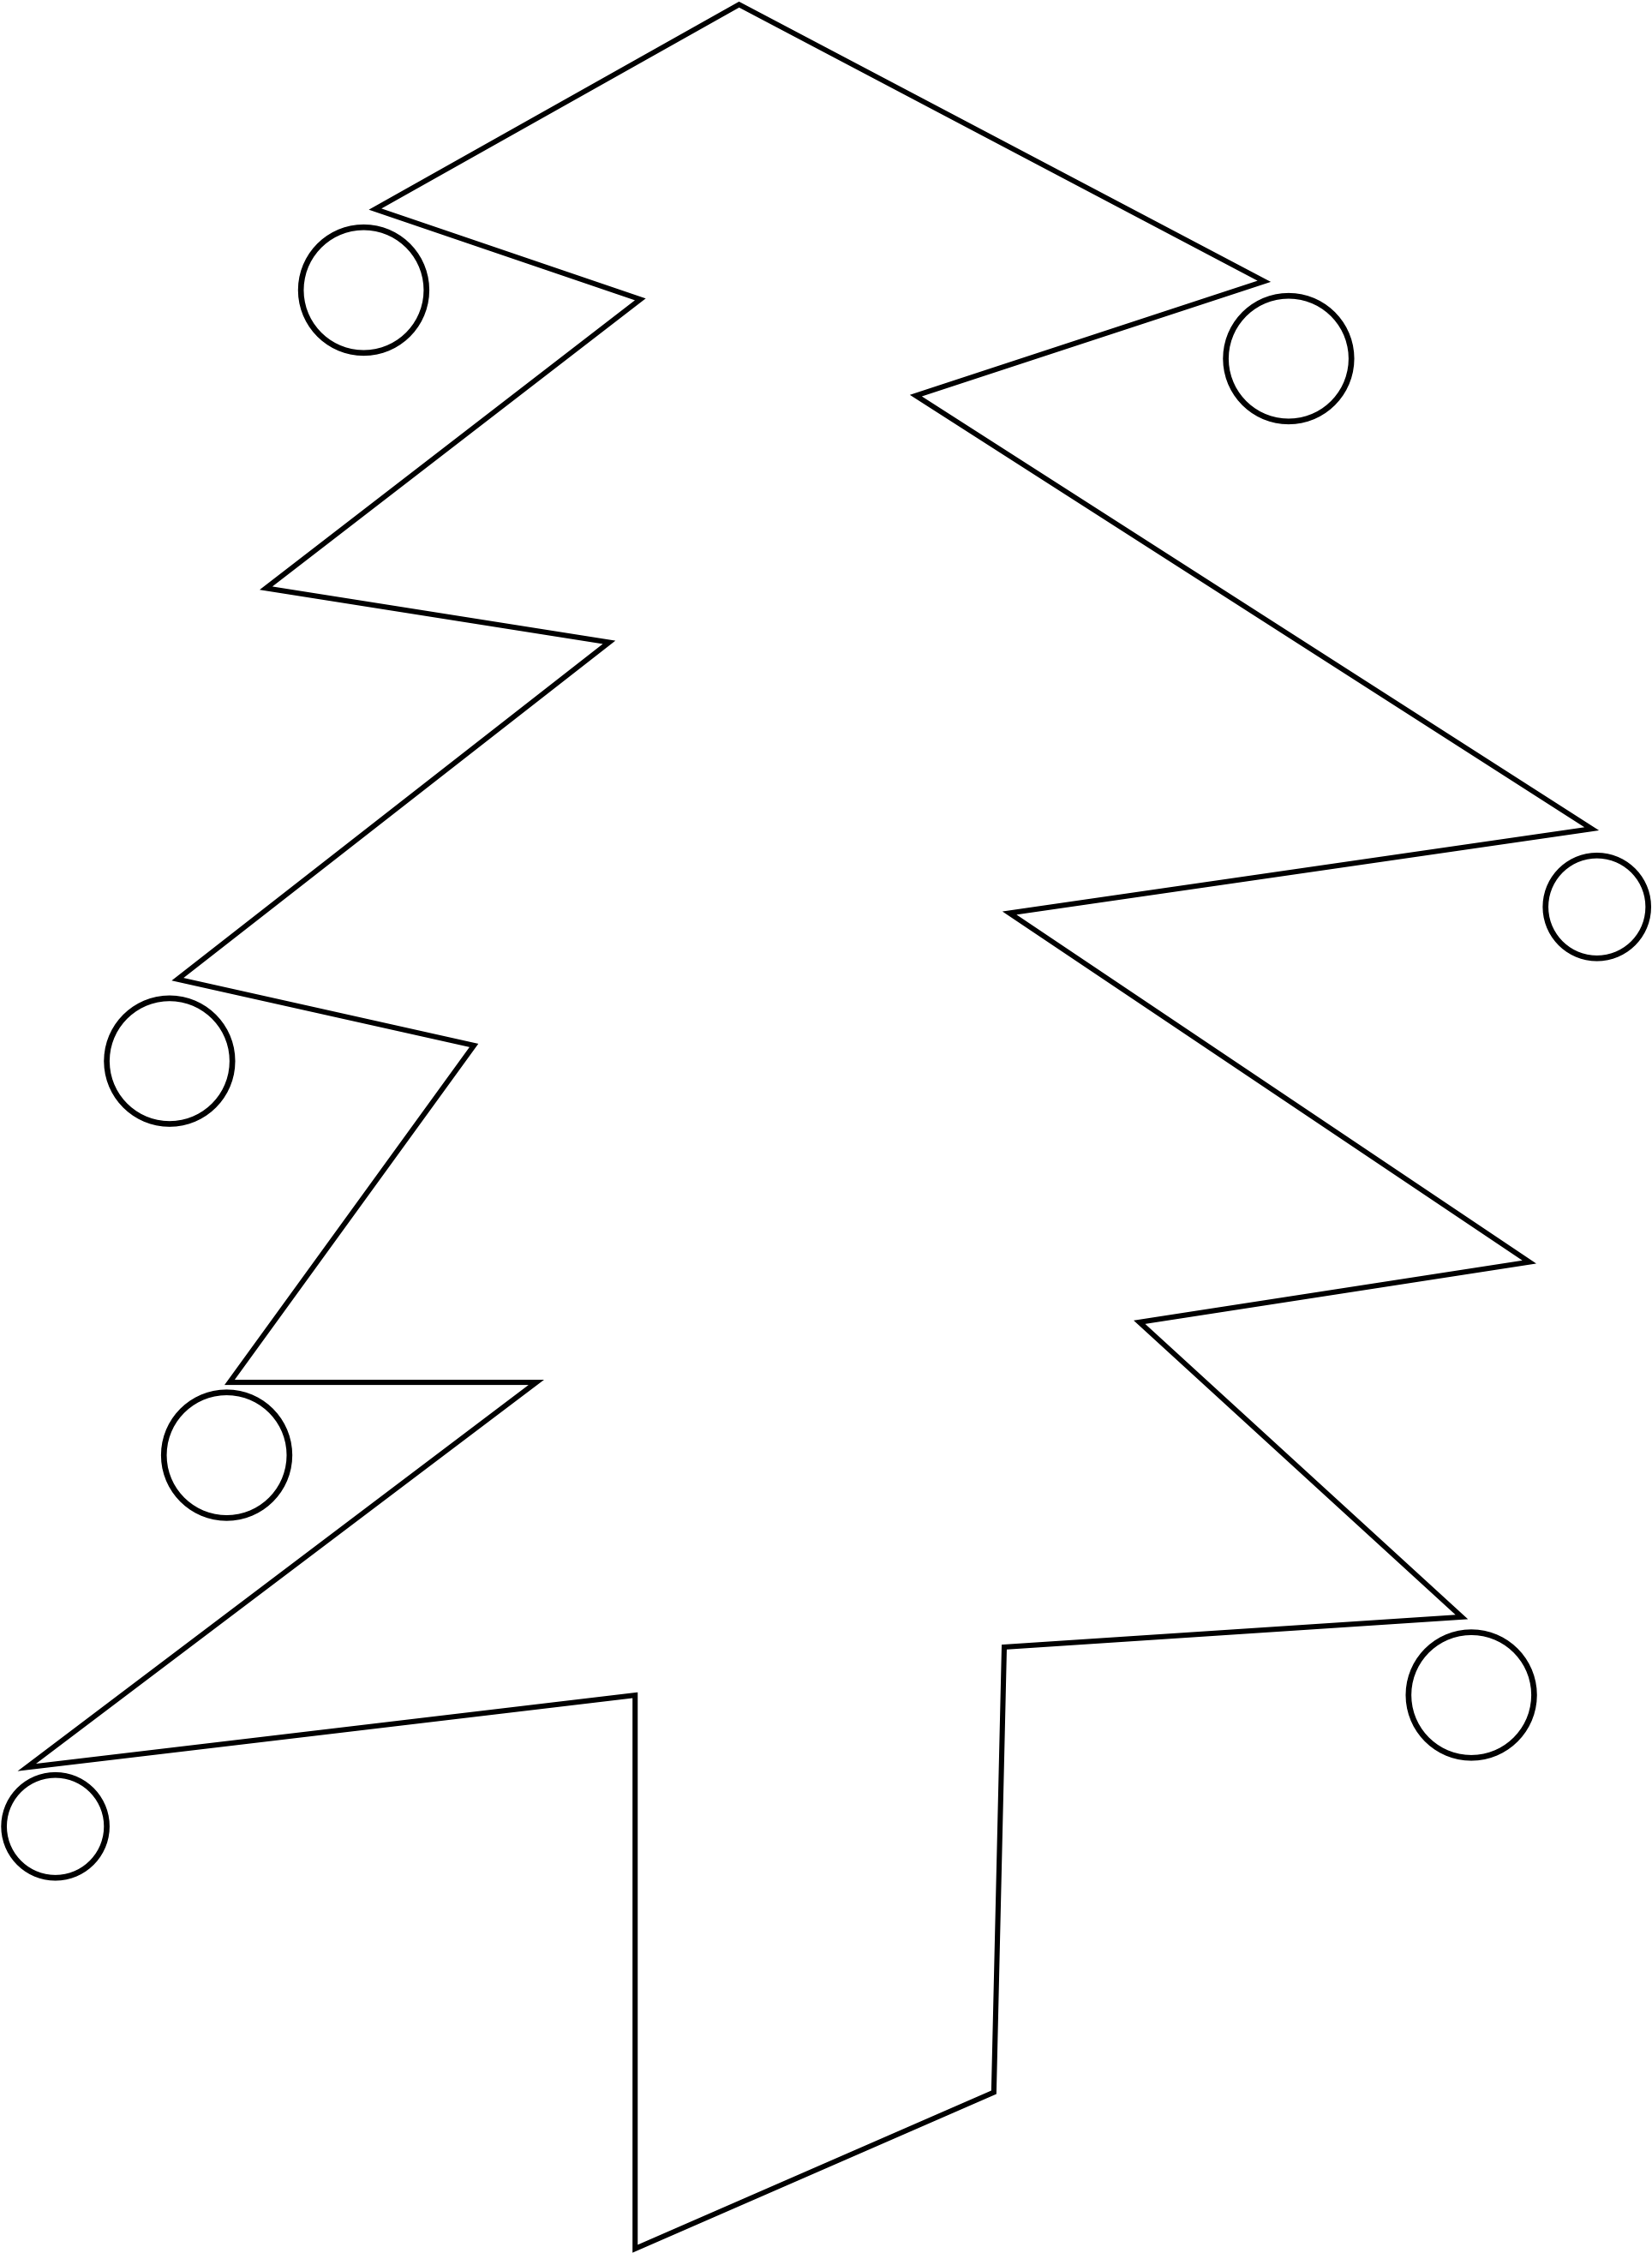 Christmas Tree Black And White Christmas Tree Clip - Christmas Tree Black And White Christmas Tree Clip (1979x2799)